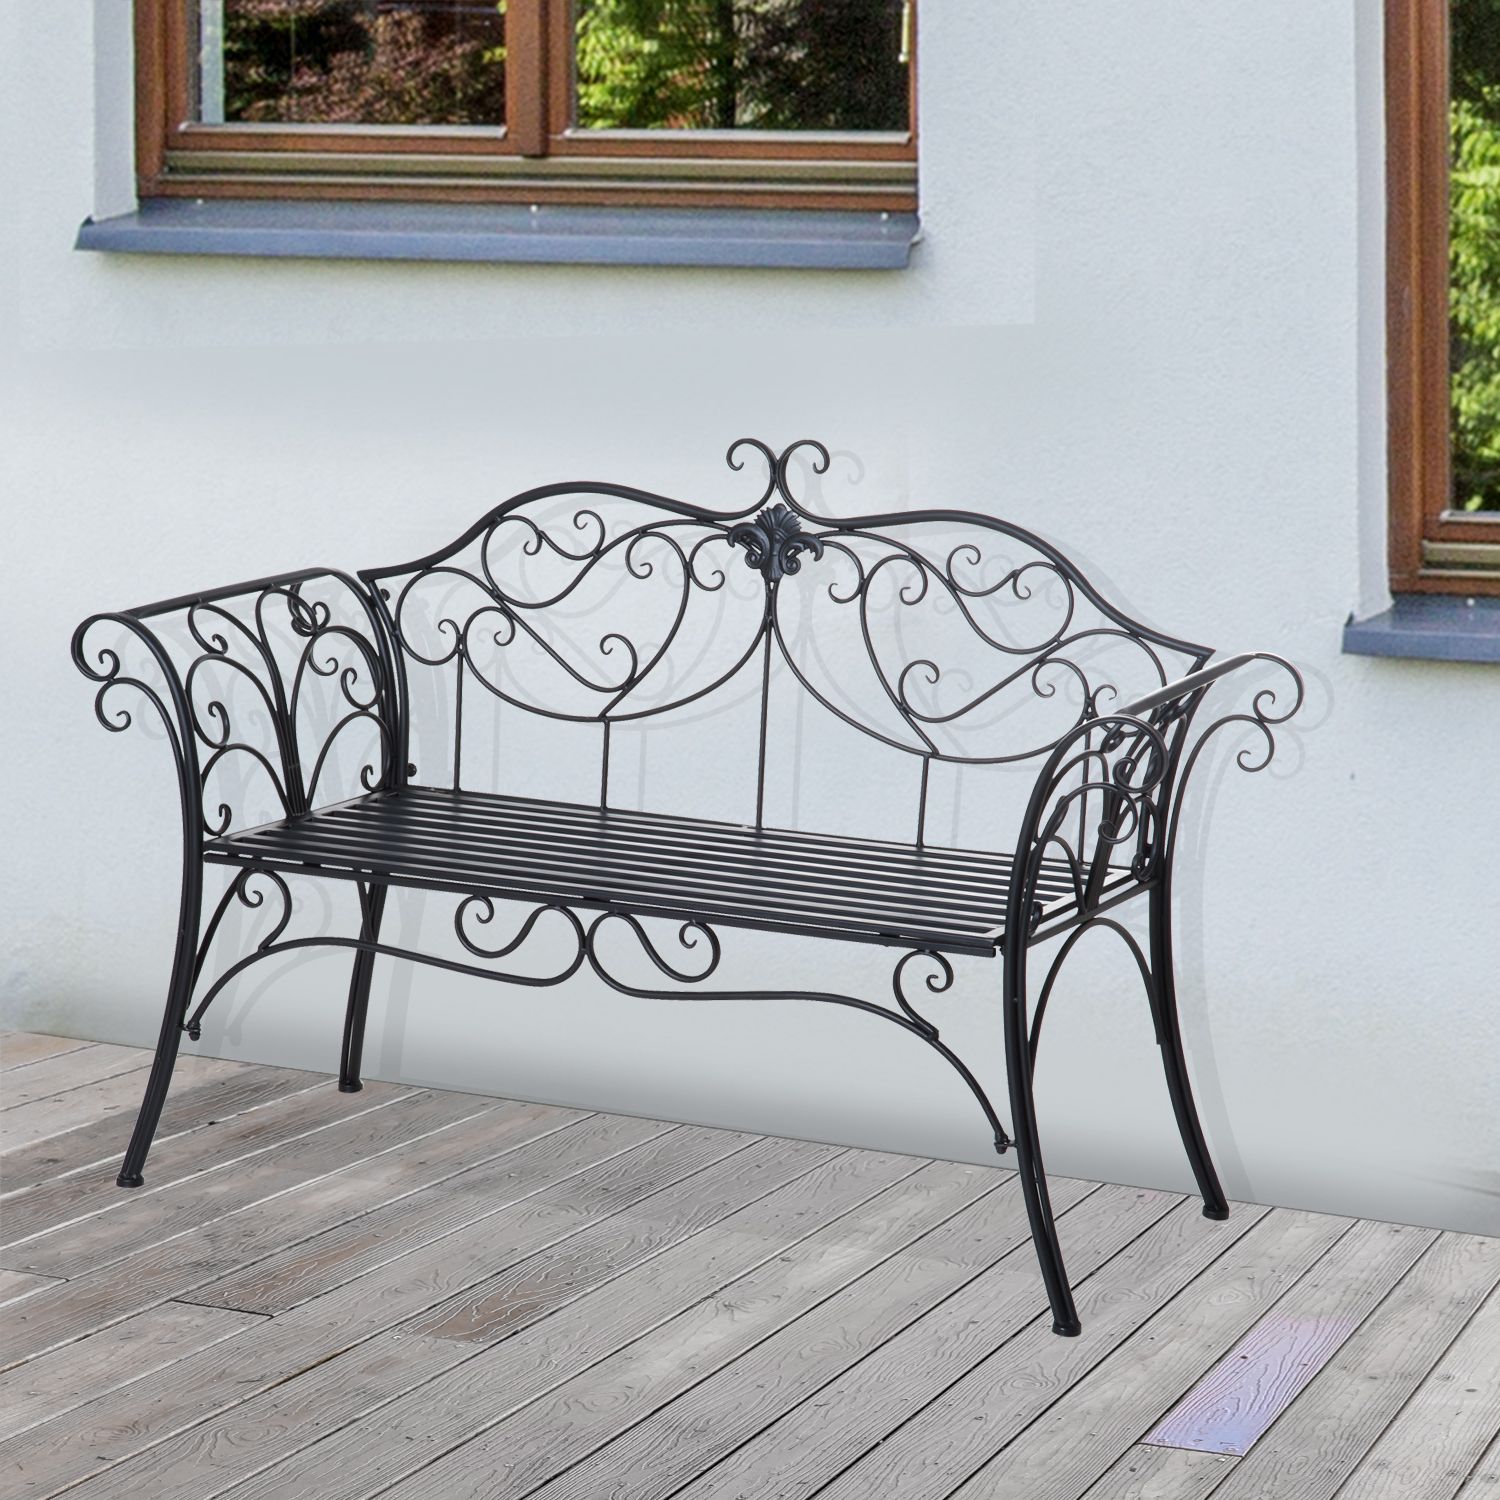 2020 Outsunny Garden Bench Porch Outdoor Seat Chair Backrest Metal Black Park Regarding Blooming Iron Garden Benches (View 27 of 30)